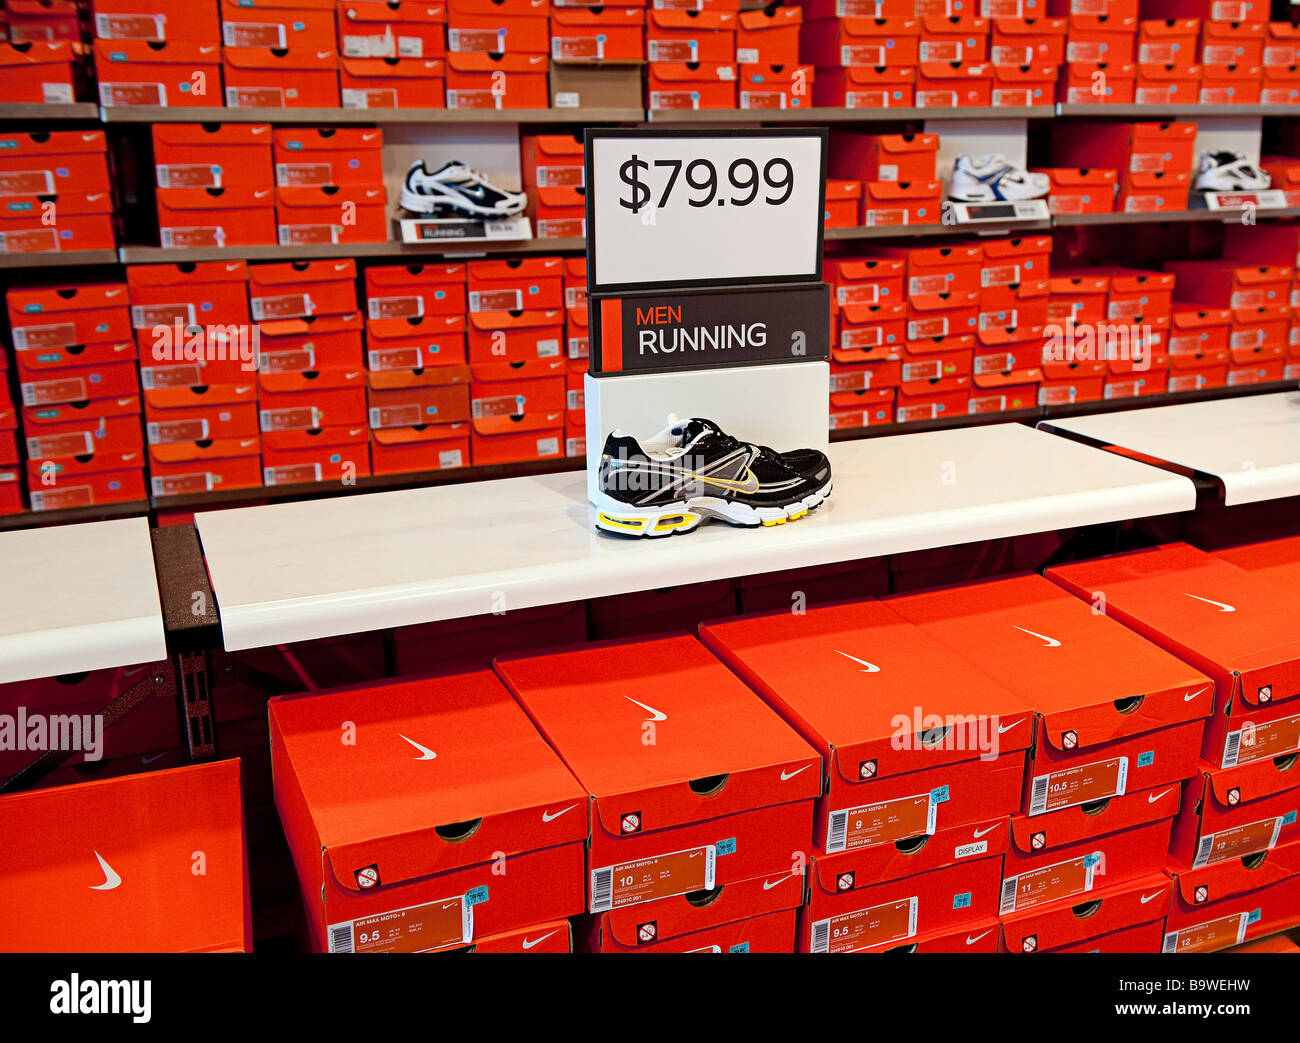 Nike shoe outlet Stock Photo - Alamy